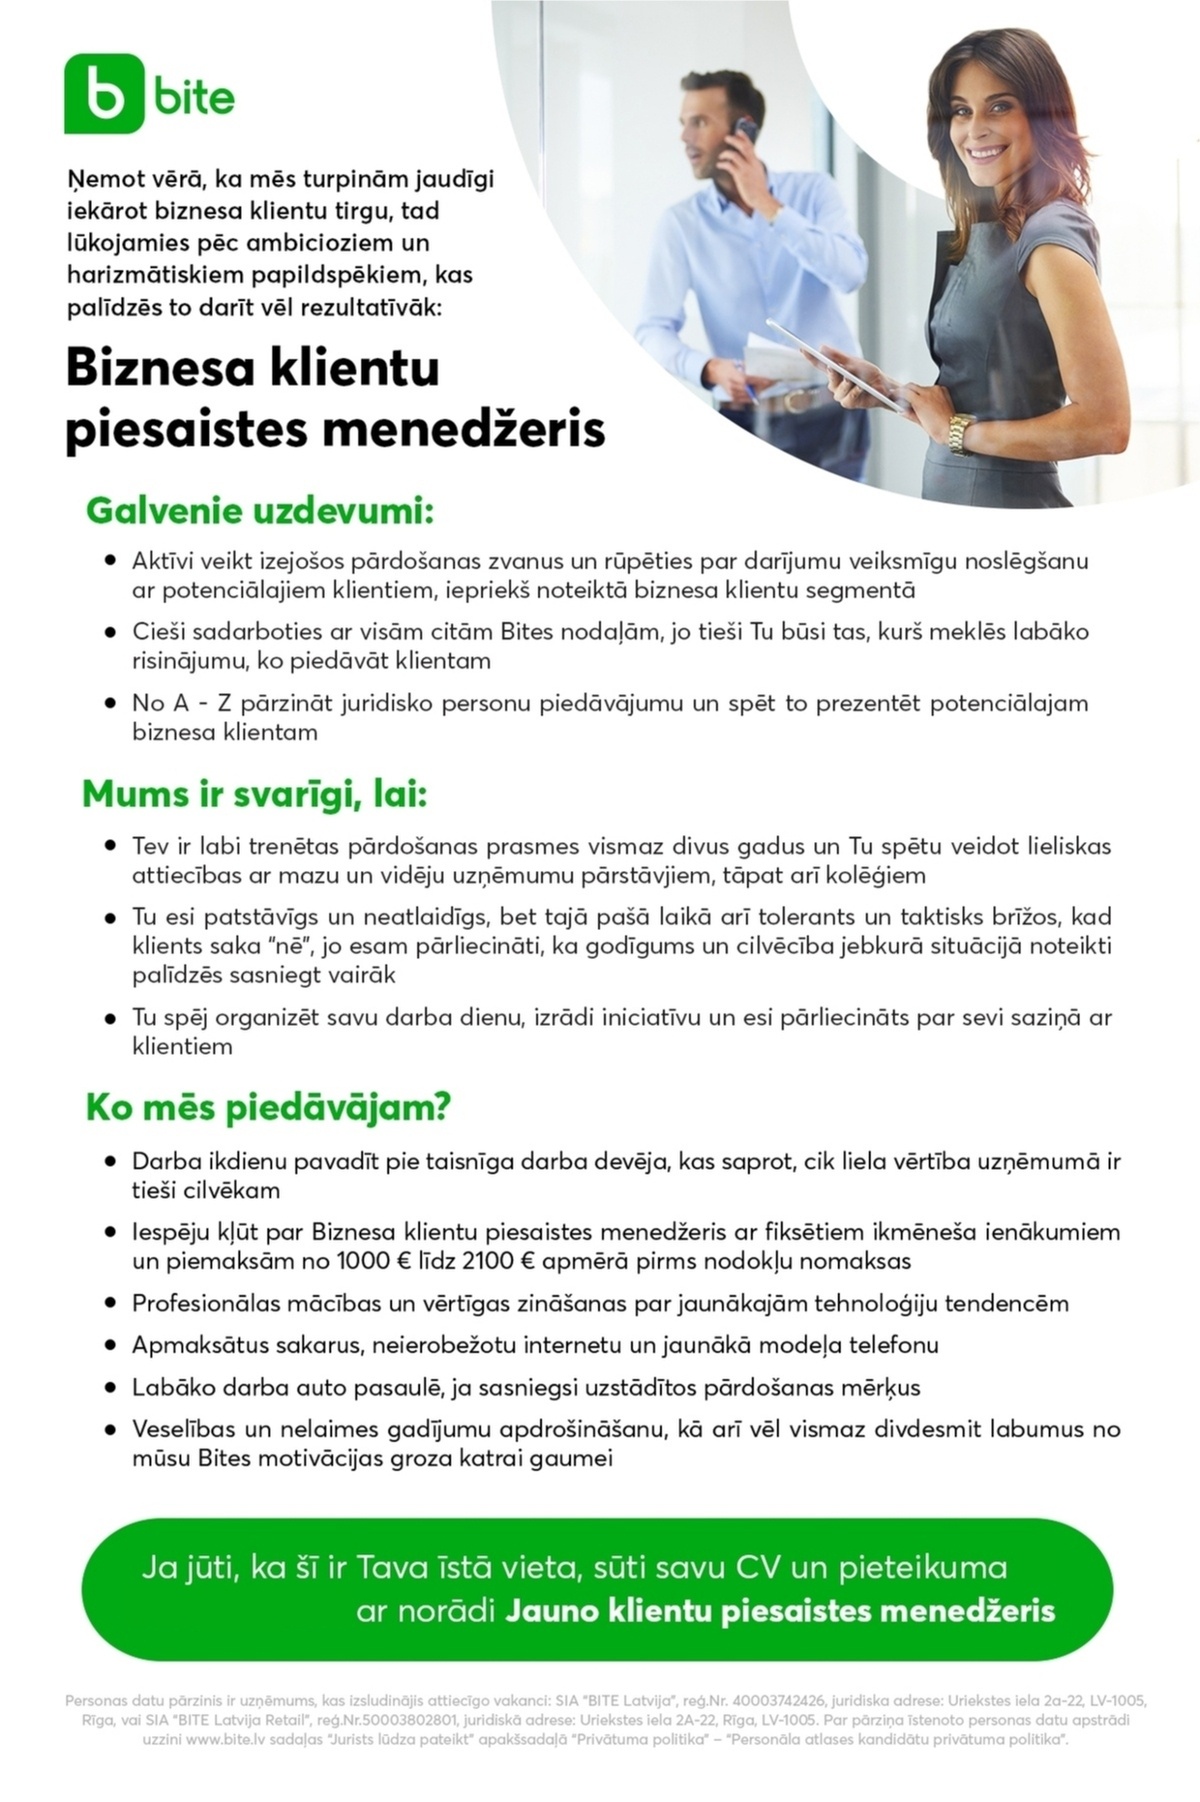 Bite Latvija, SIA Biznesa klientu piesaistes menedžeris/-e